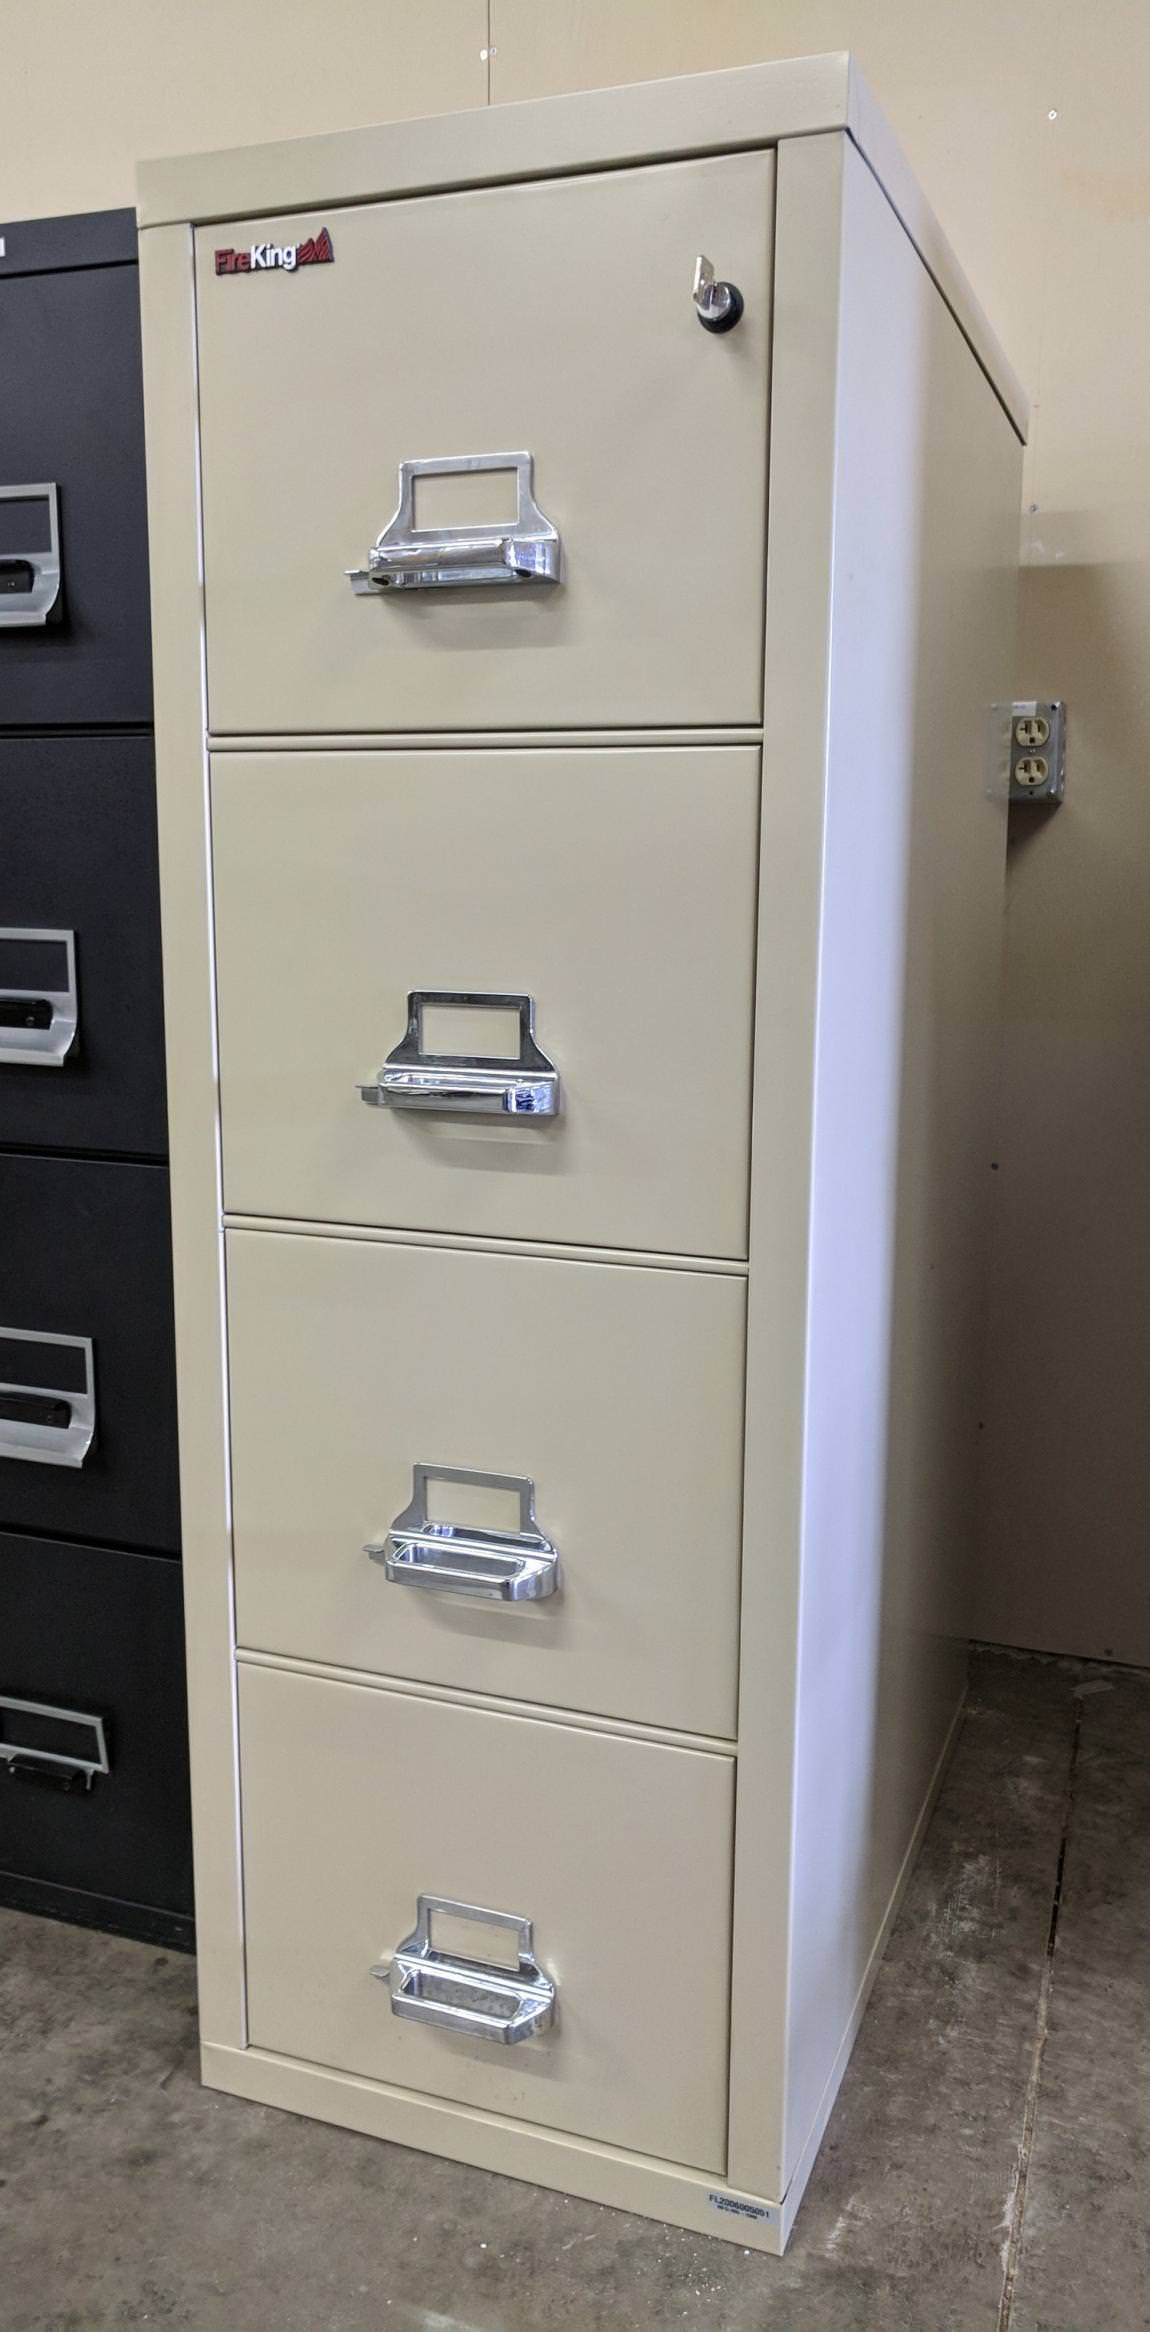 FireKing 4 Drawer Fireproof Letter Size File Cabinet